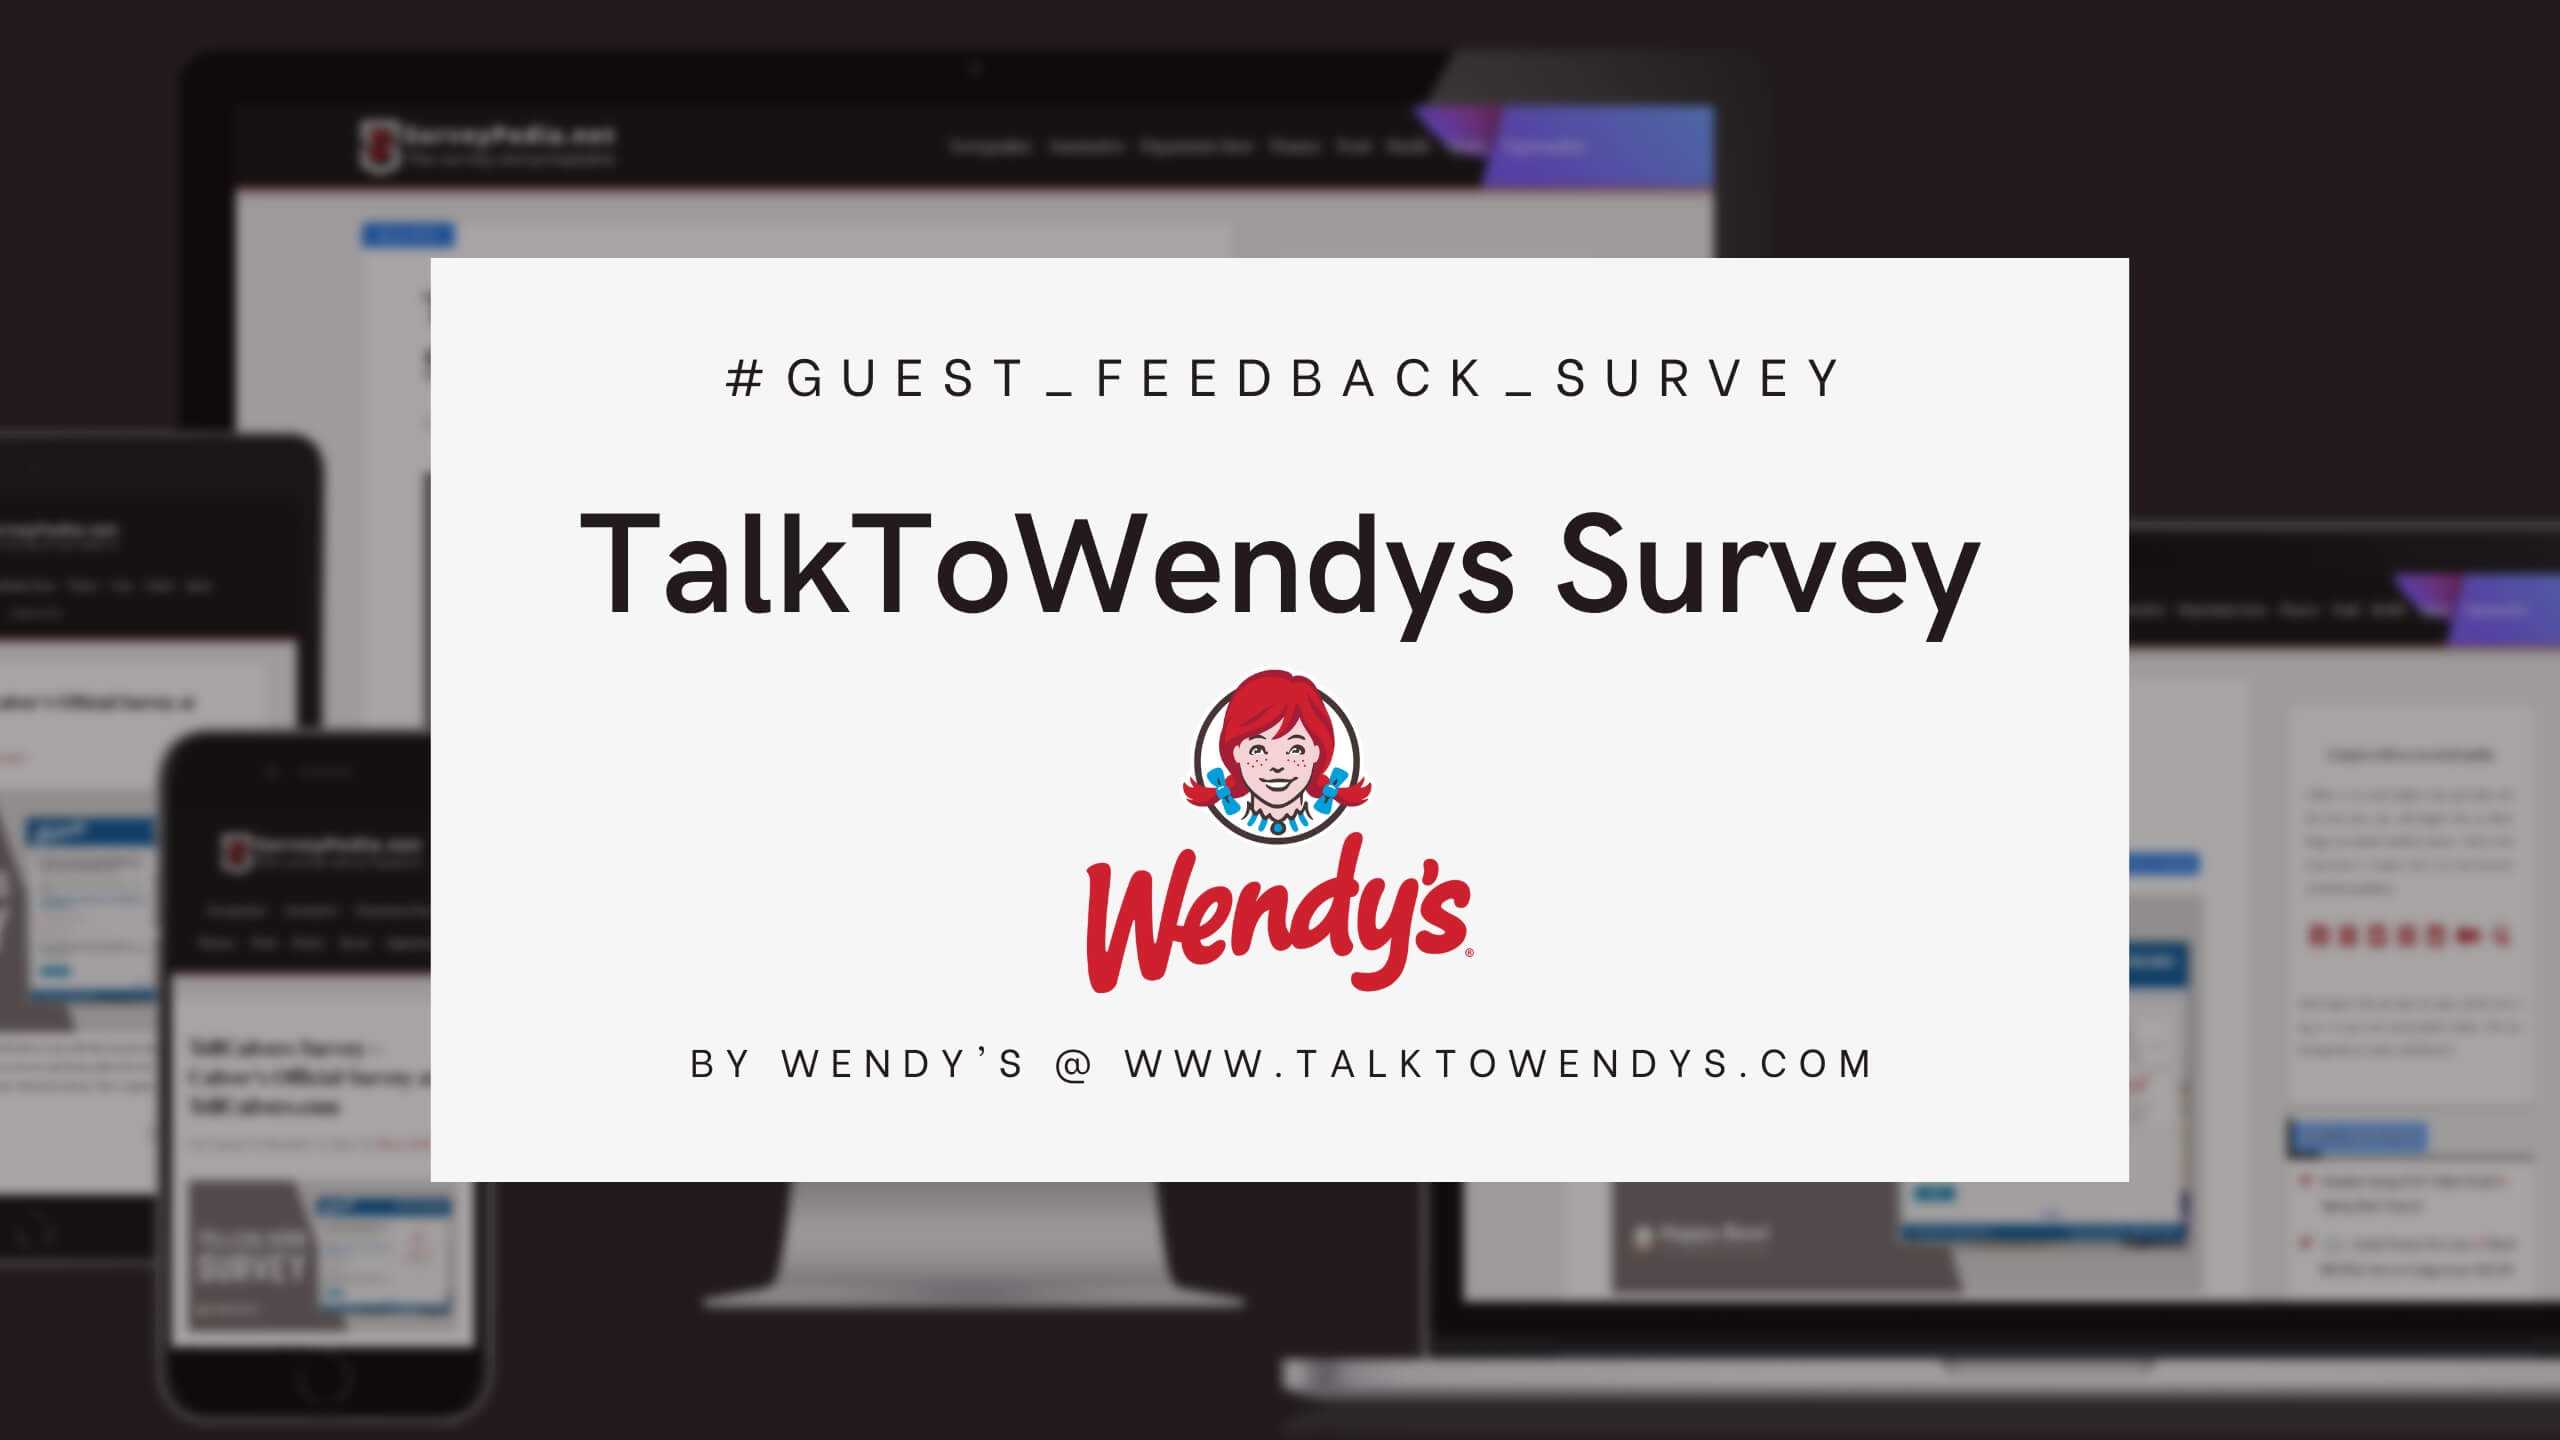 TalkToWendys Survey: Wendy's Official Customer Feedback Survey at TalkToWendys.com